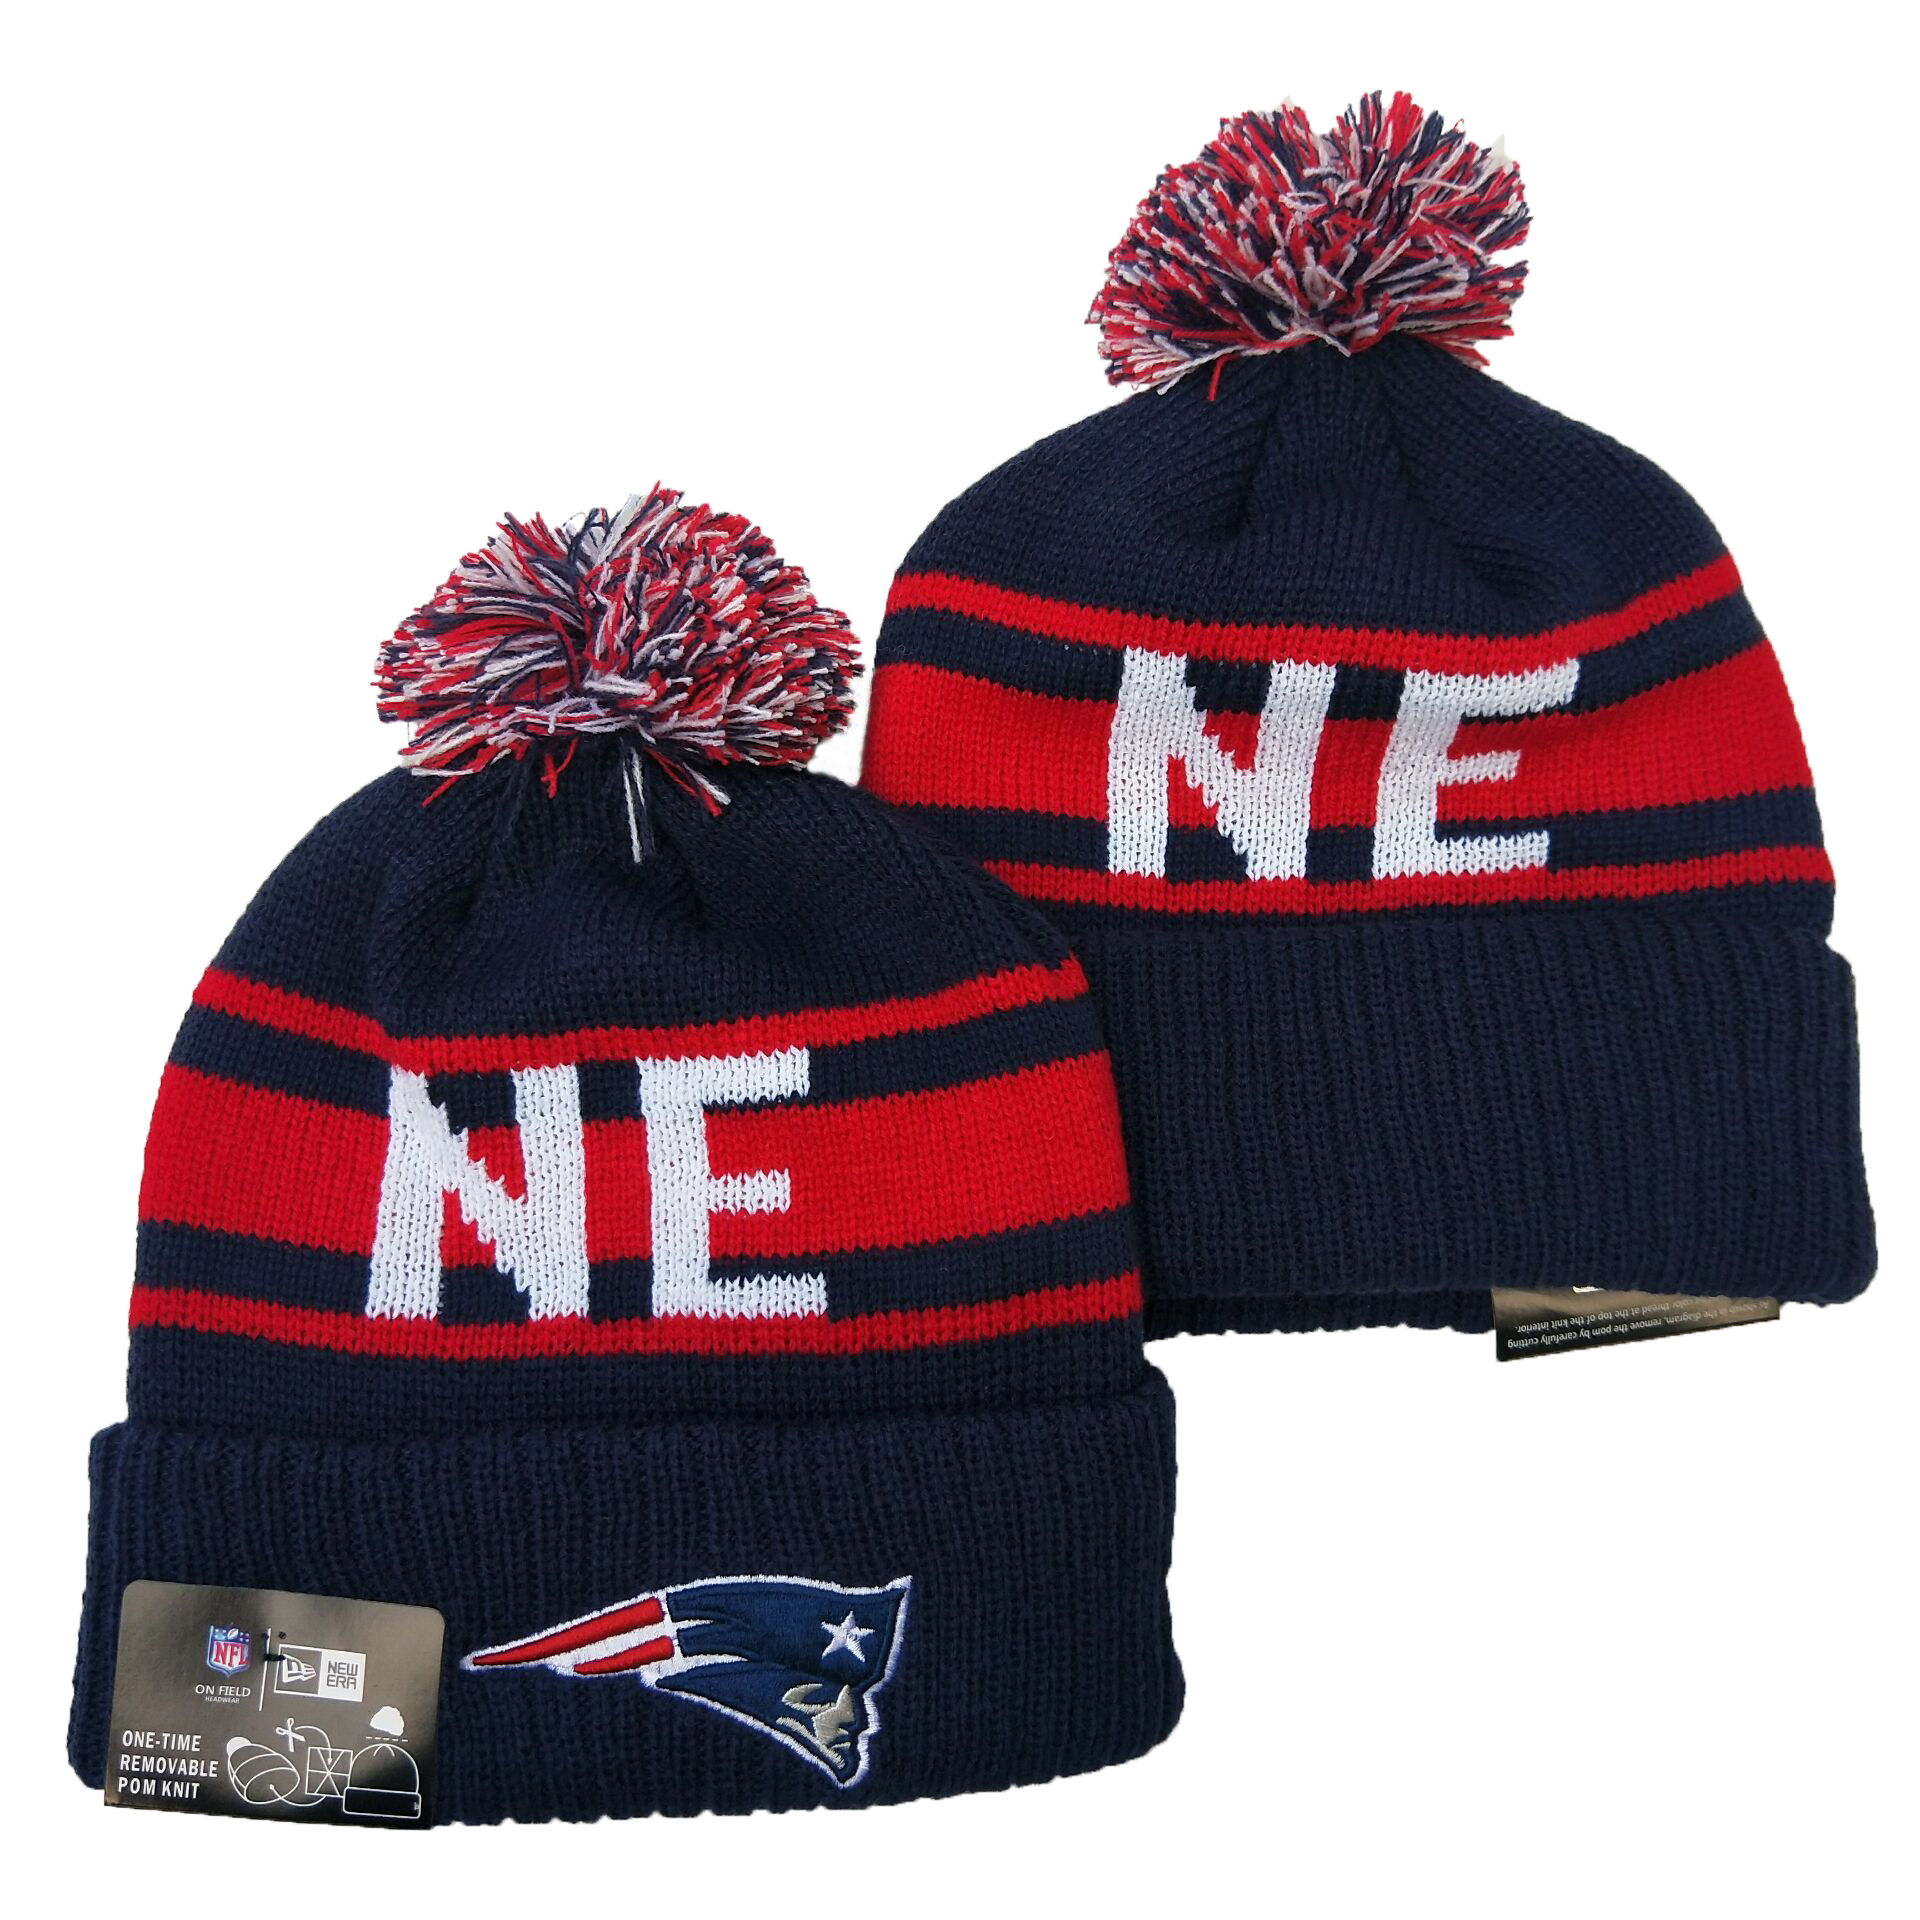 New England Patriots Knit Hats 052